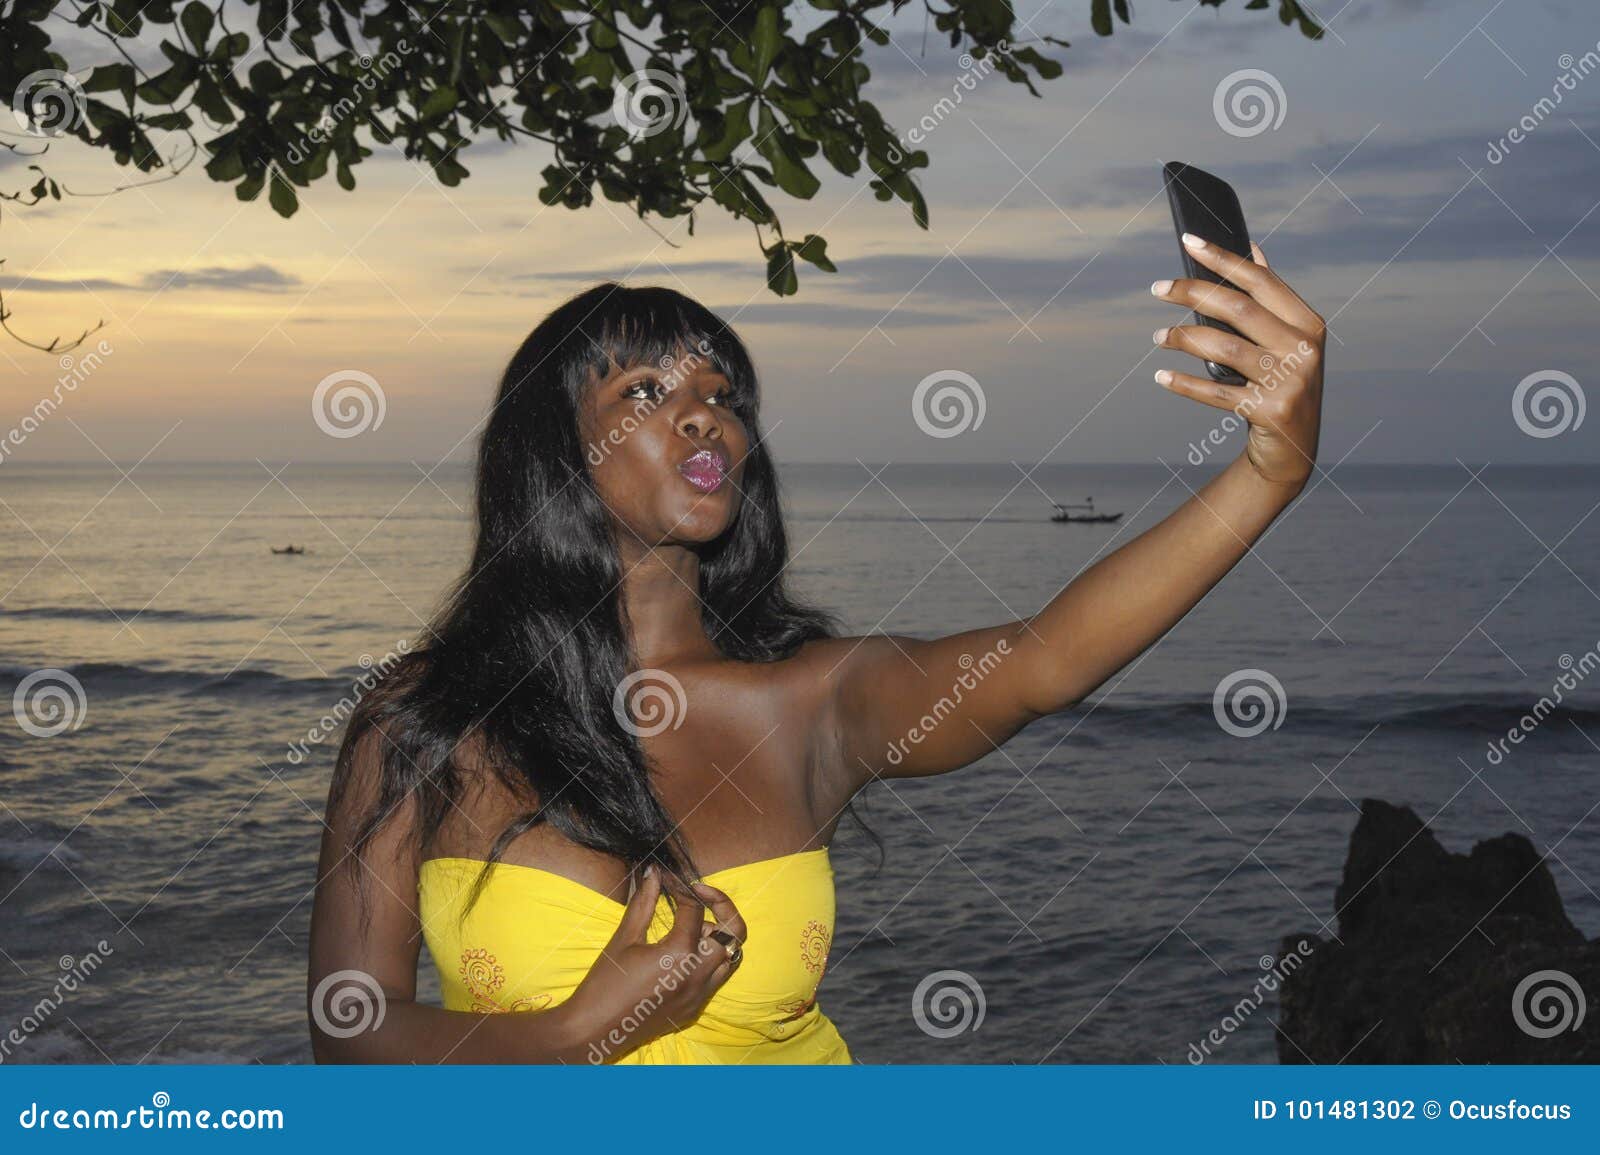 american ebony selfie